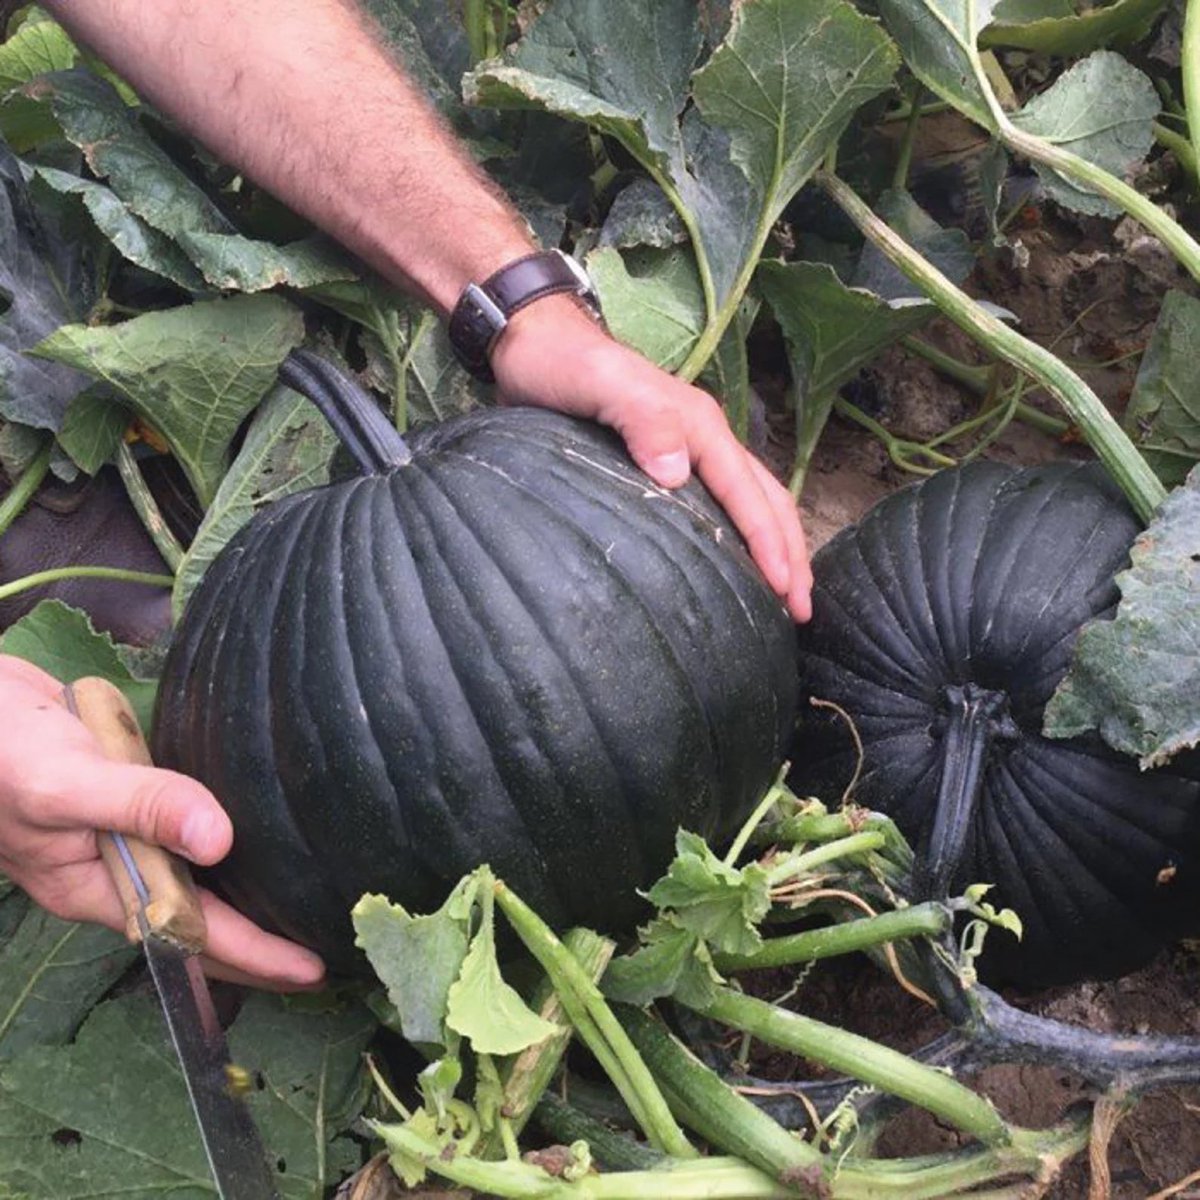 Dark Knight #PumpkinSeeds Gourd 🎃
#NonGMO #Heirloom Vegetable for planting Fancy Decor (RARE) New Black #BlackPumpkin #Seeds #DarkKnight 
etsy.com/listing/129106…
@vidman